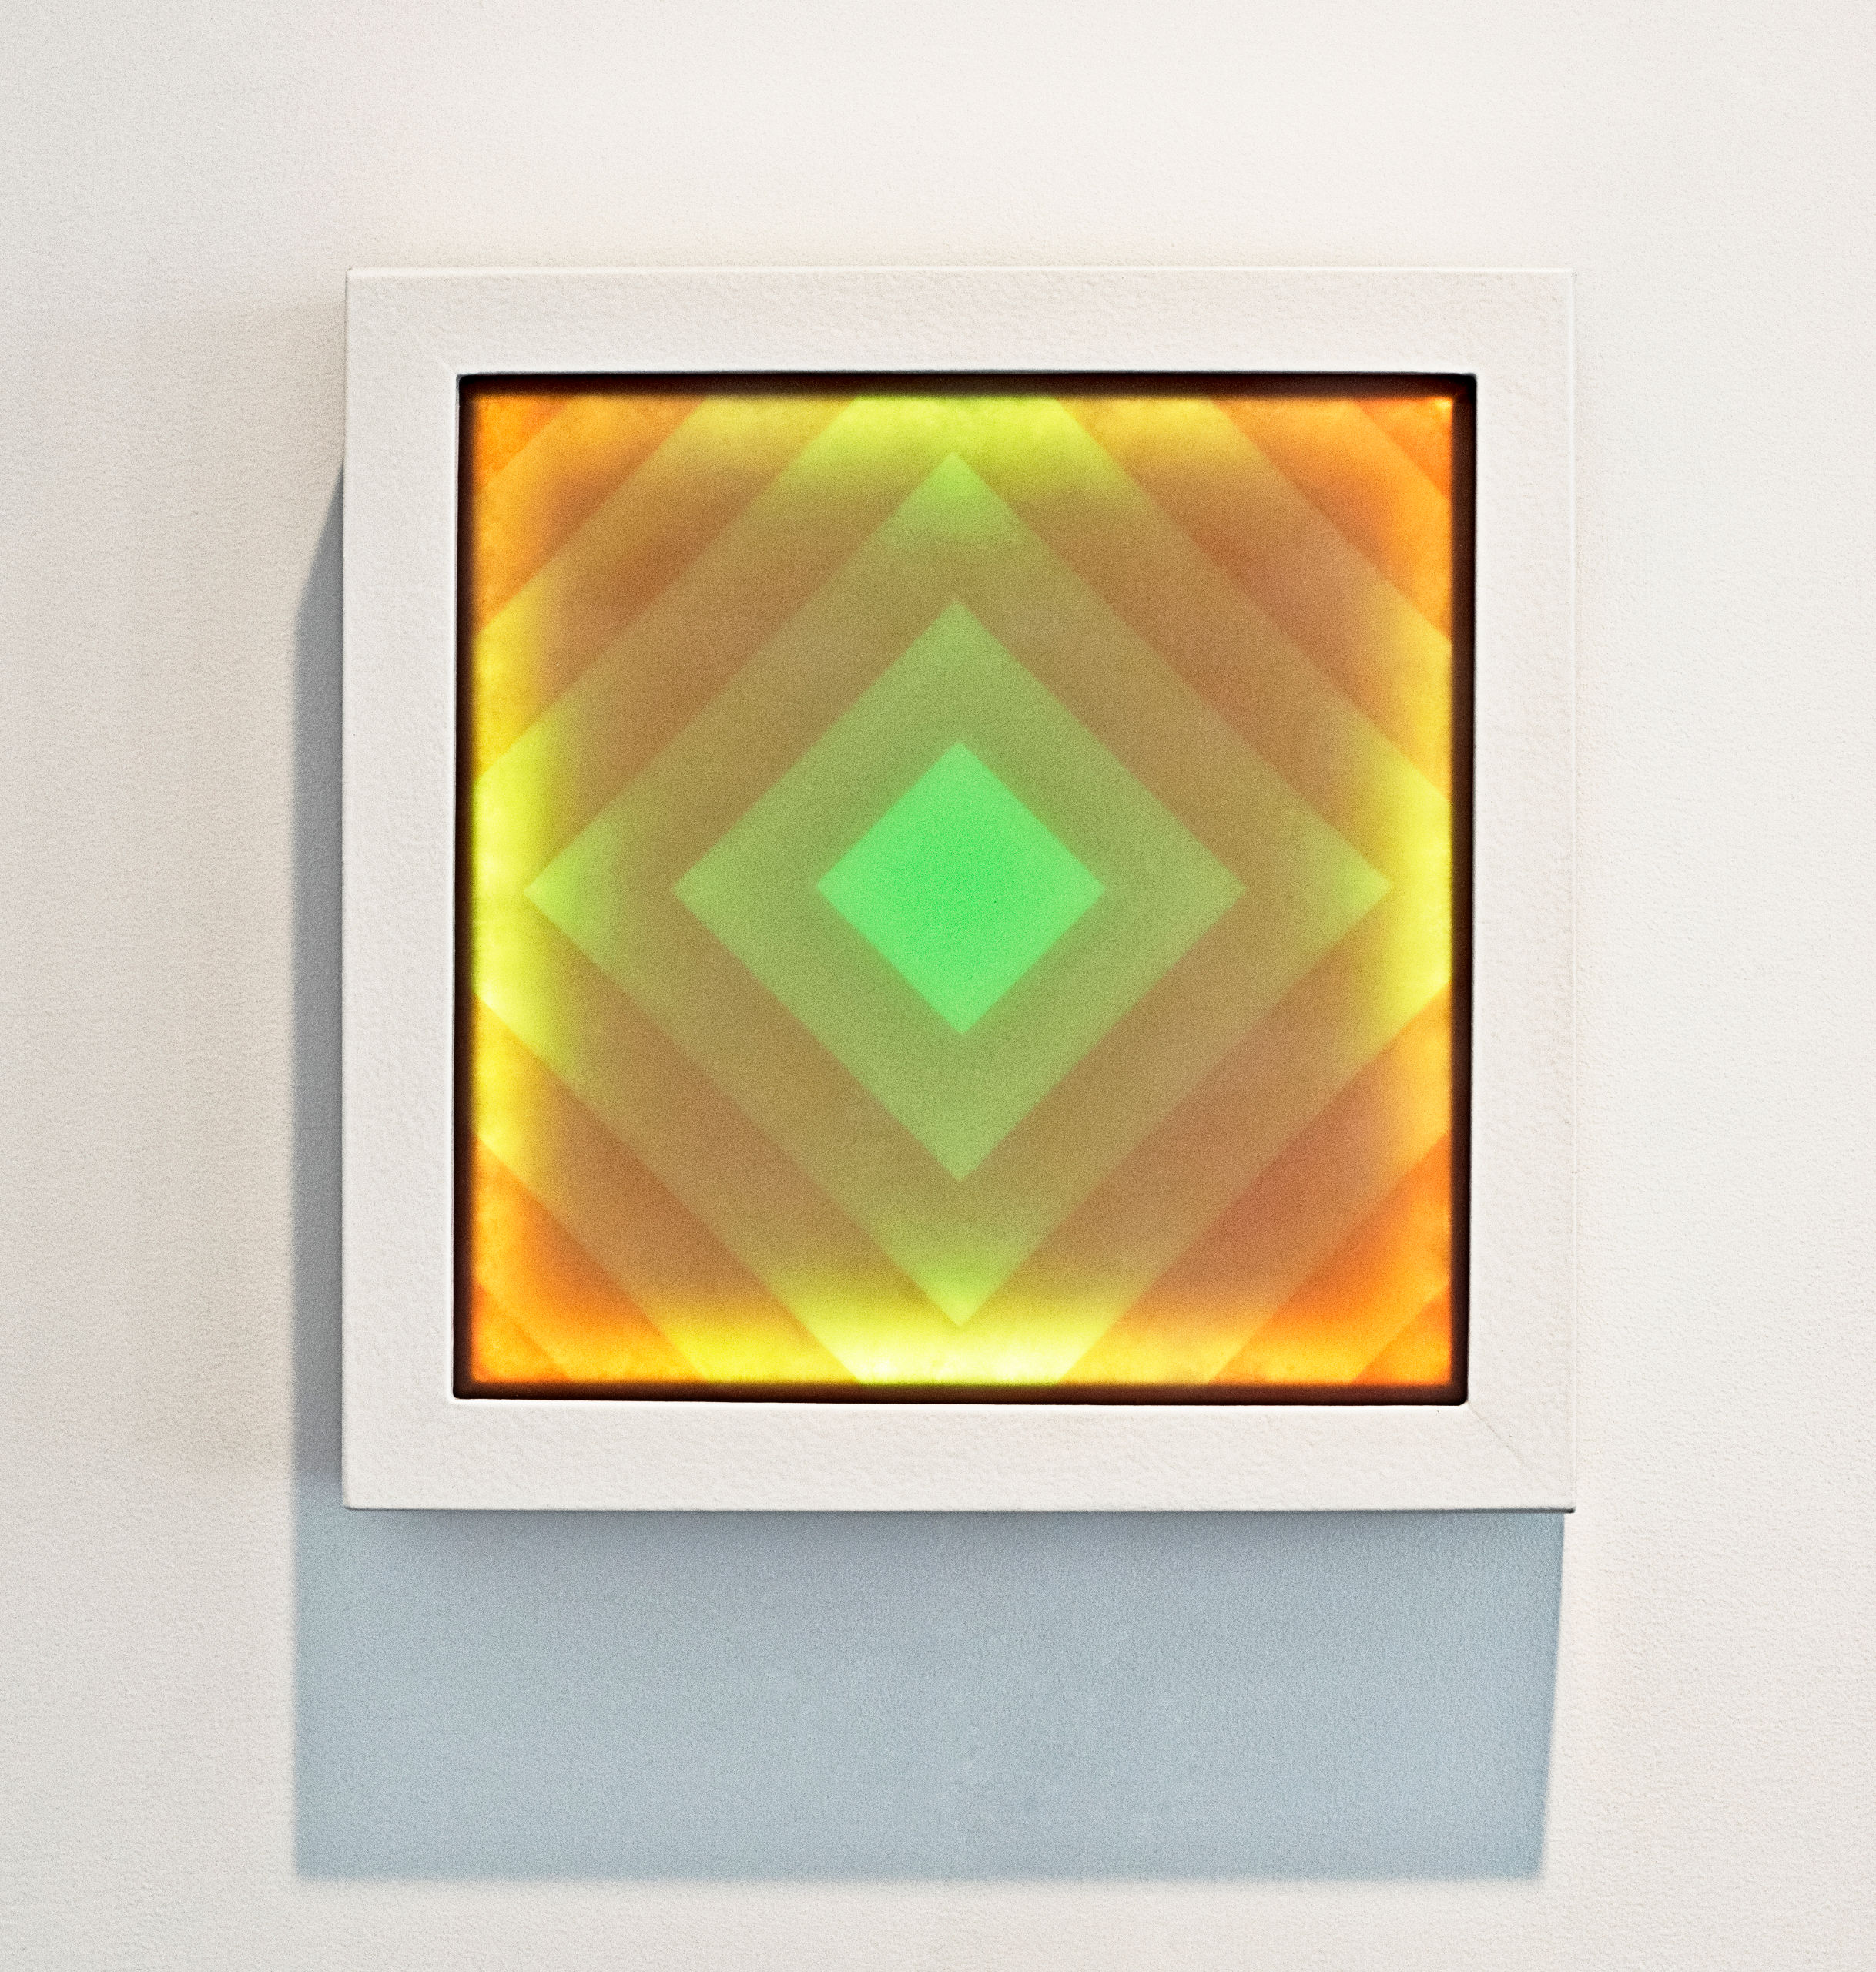 Orange and green light artwork with white frame.